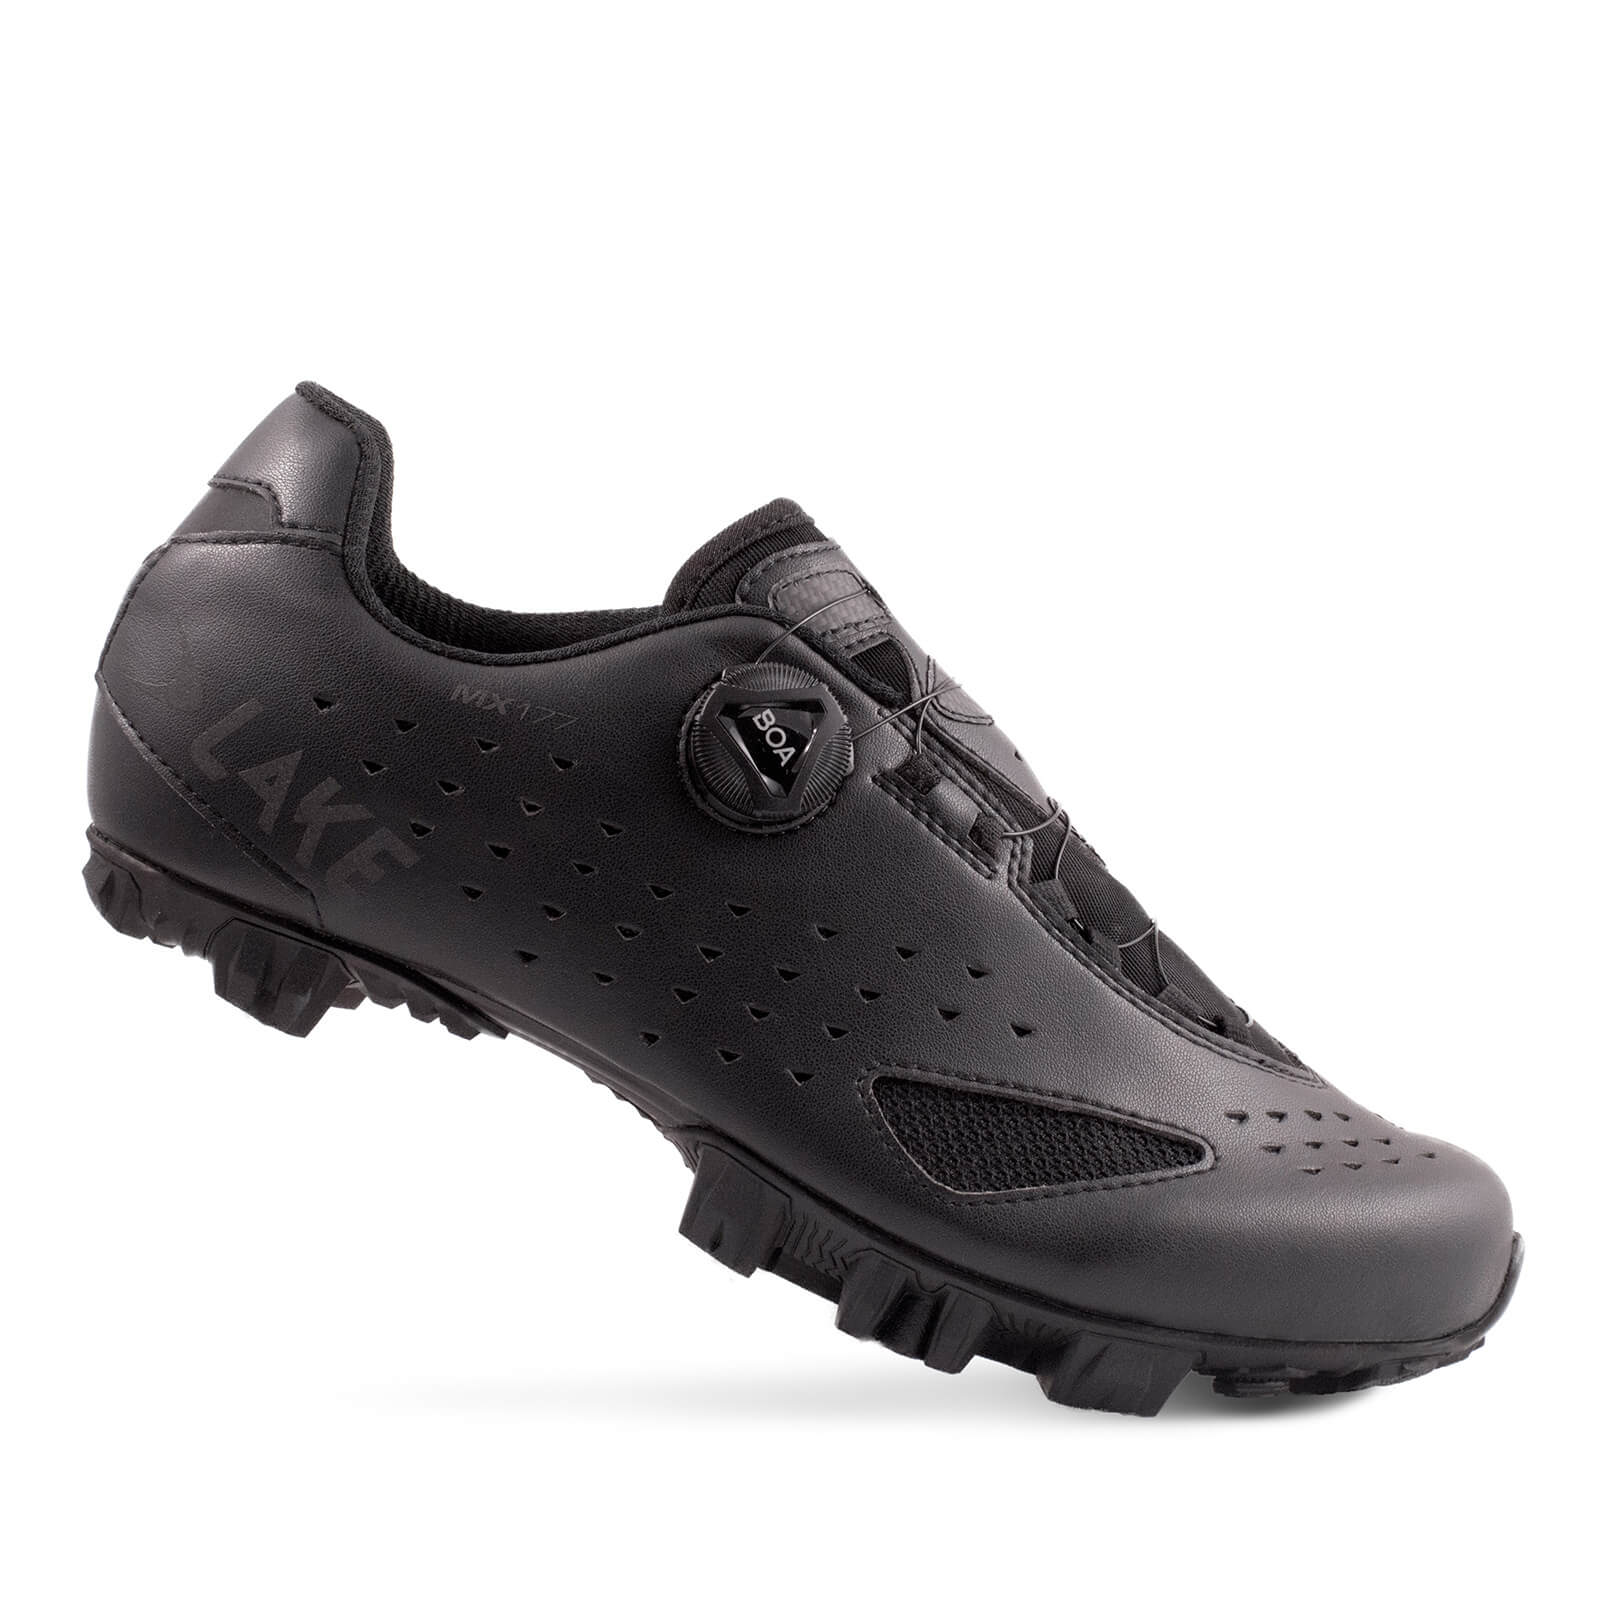 Lake MX177 MTB Shoes - EU43 - Black